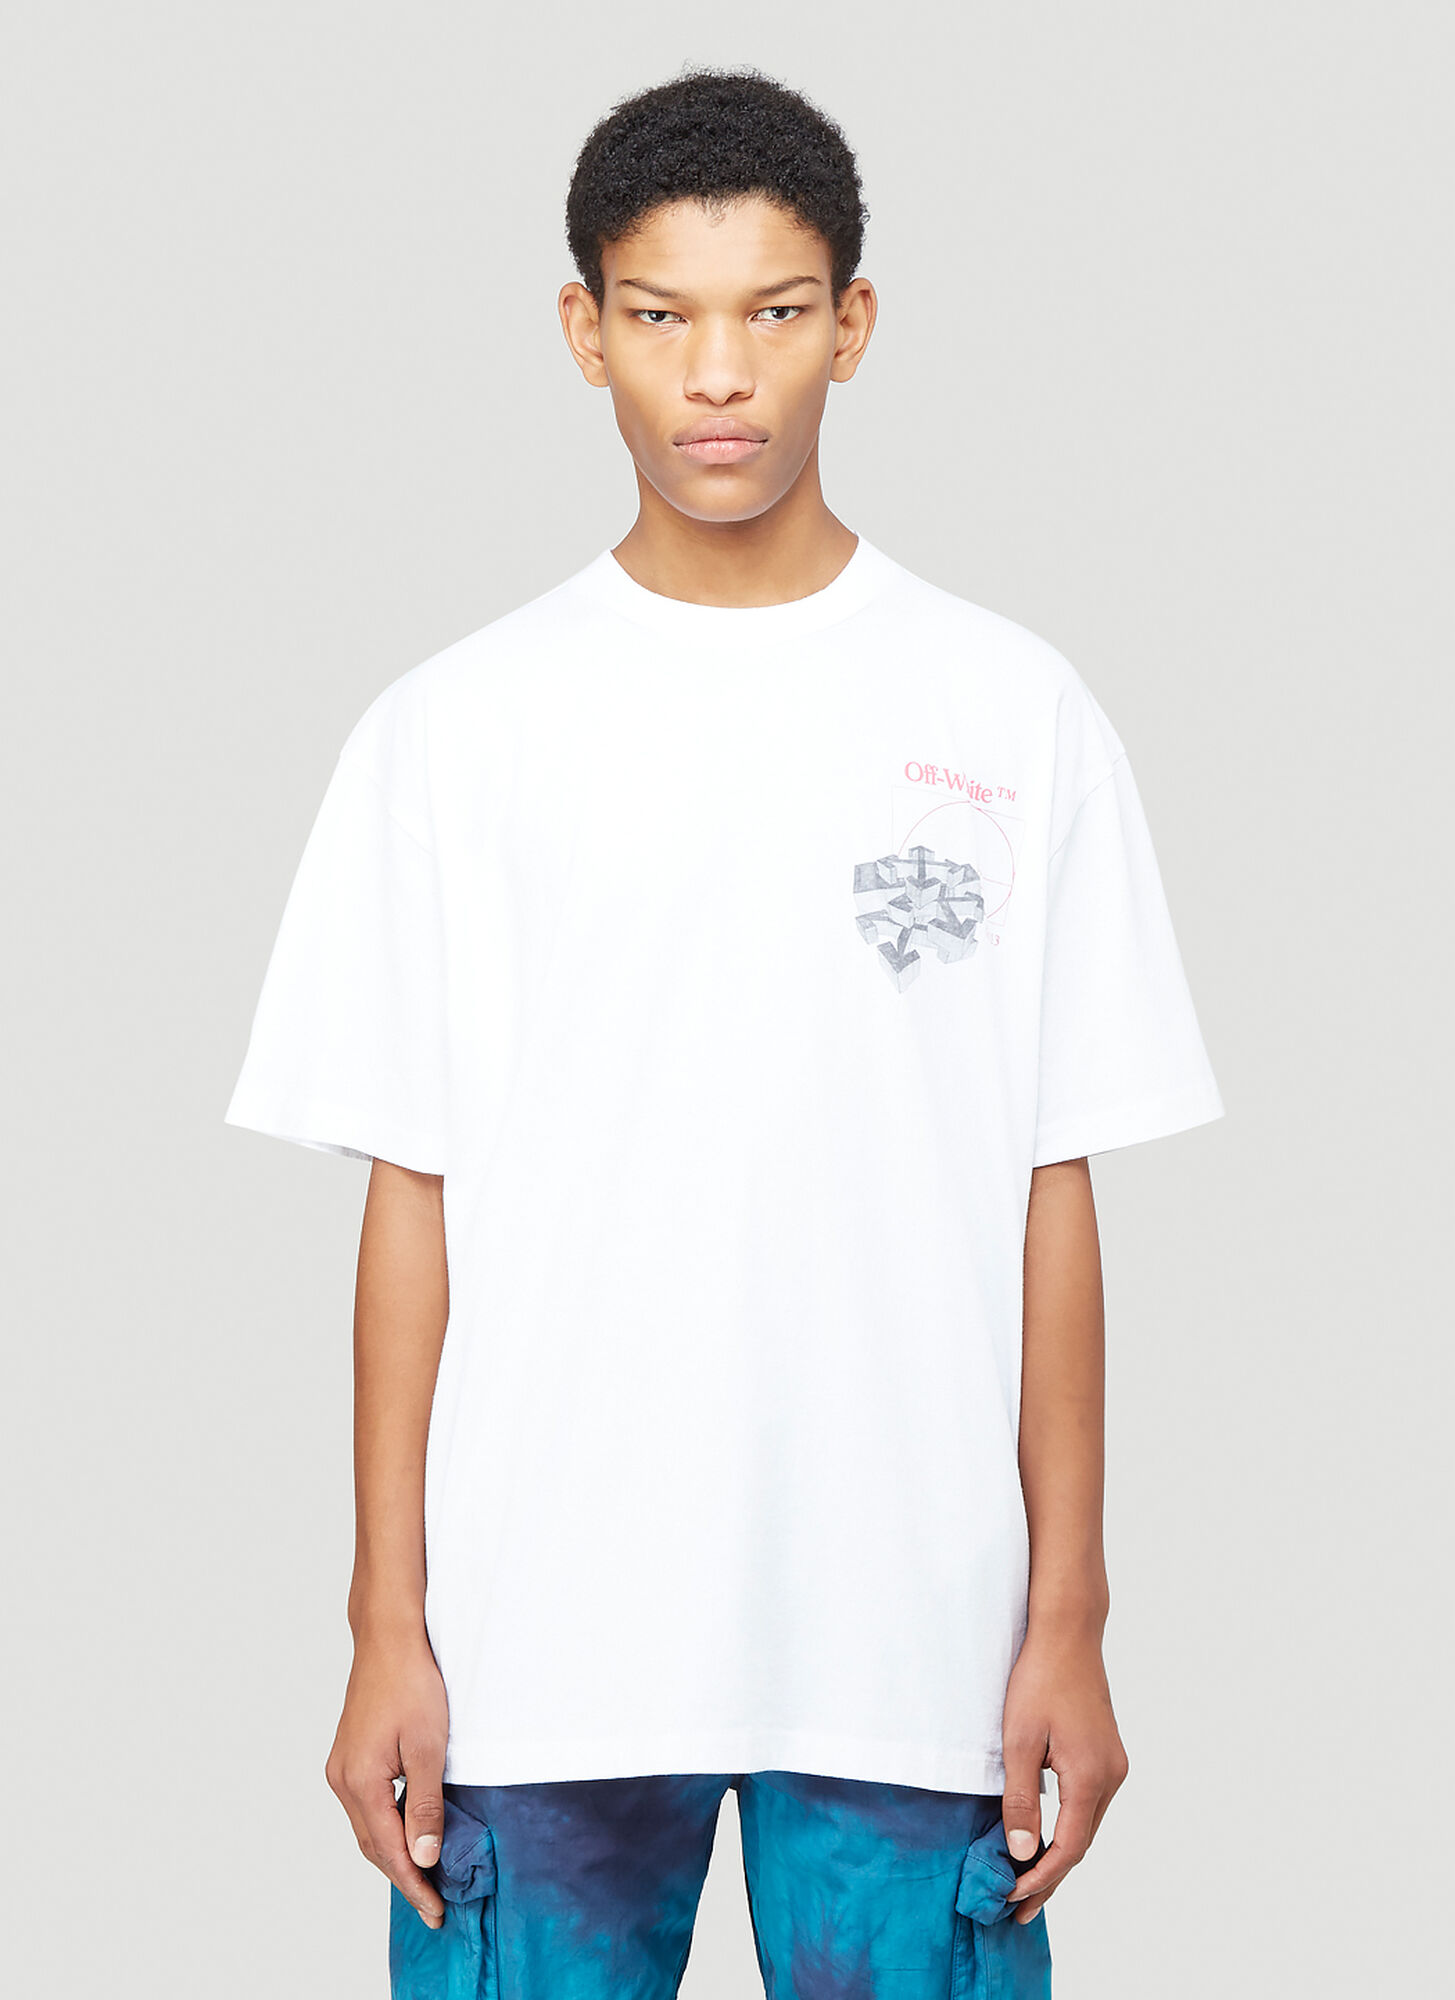 Off-White Golden Ratio T-Shirt in White size XS | The Fashionisto